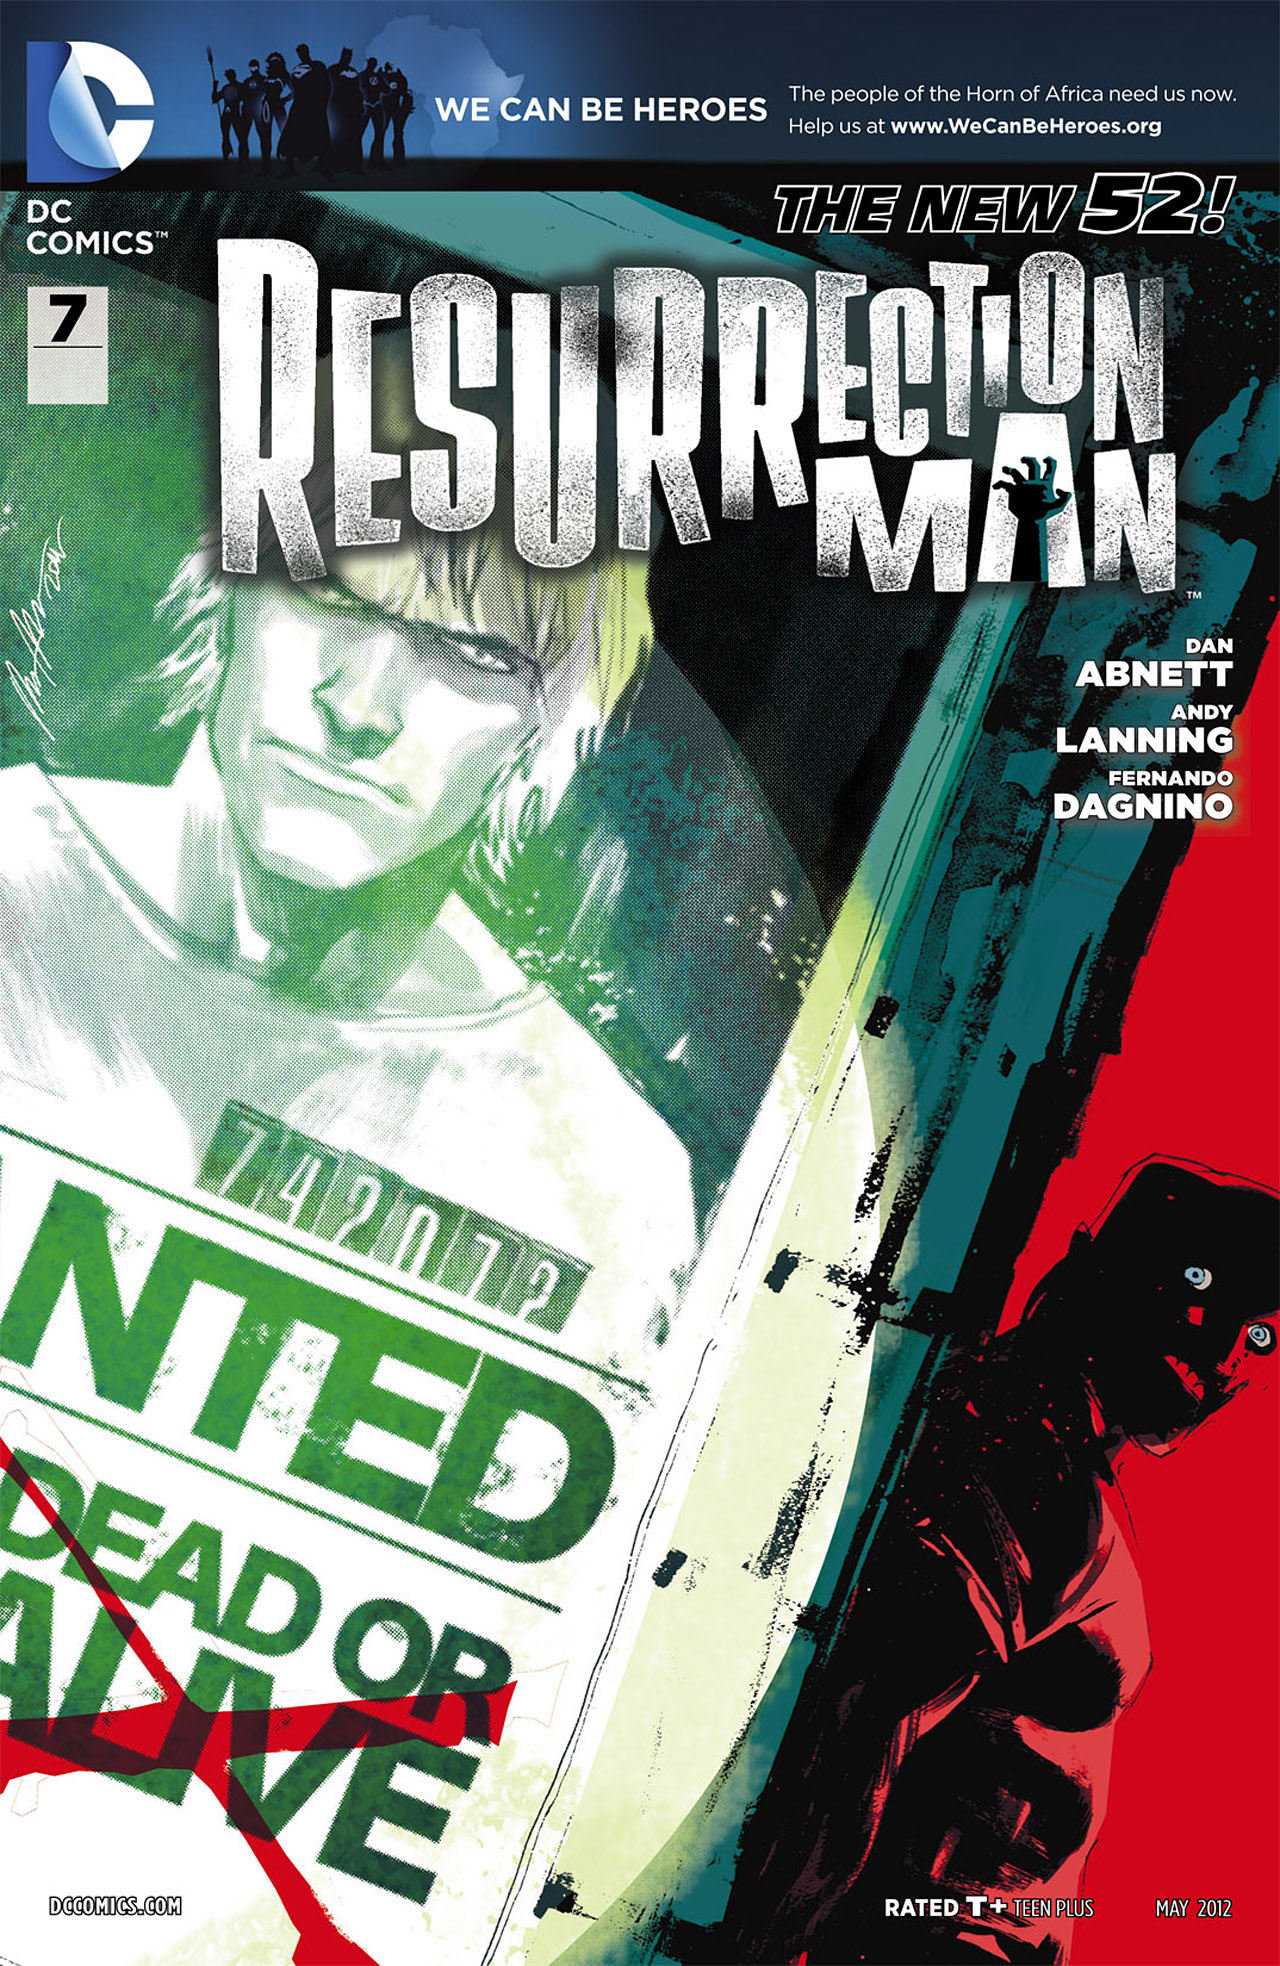 Resurrection Man Vol 2 7 DC Database FANDOM powered by Wikia